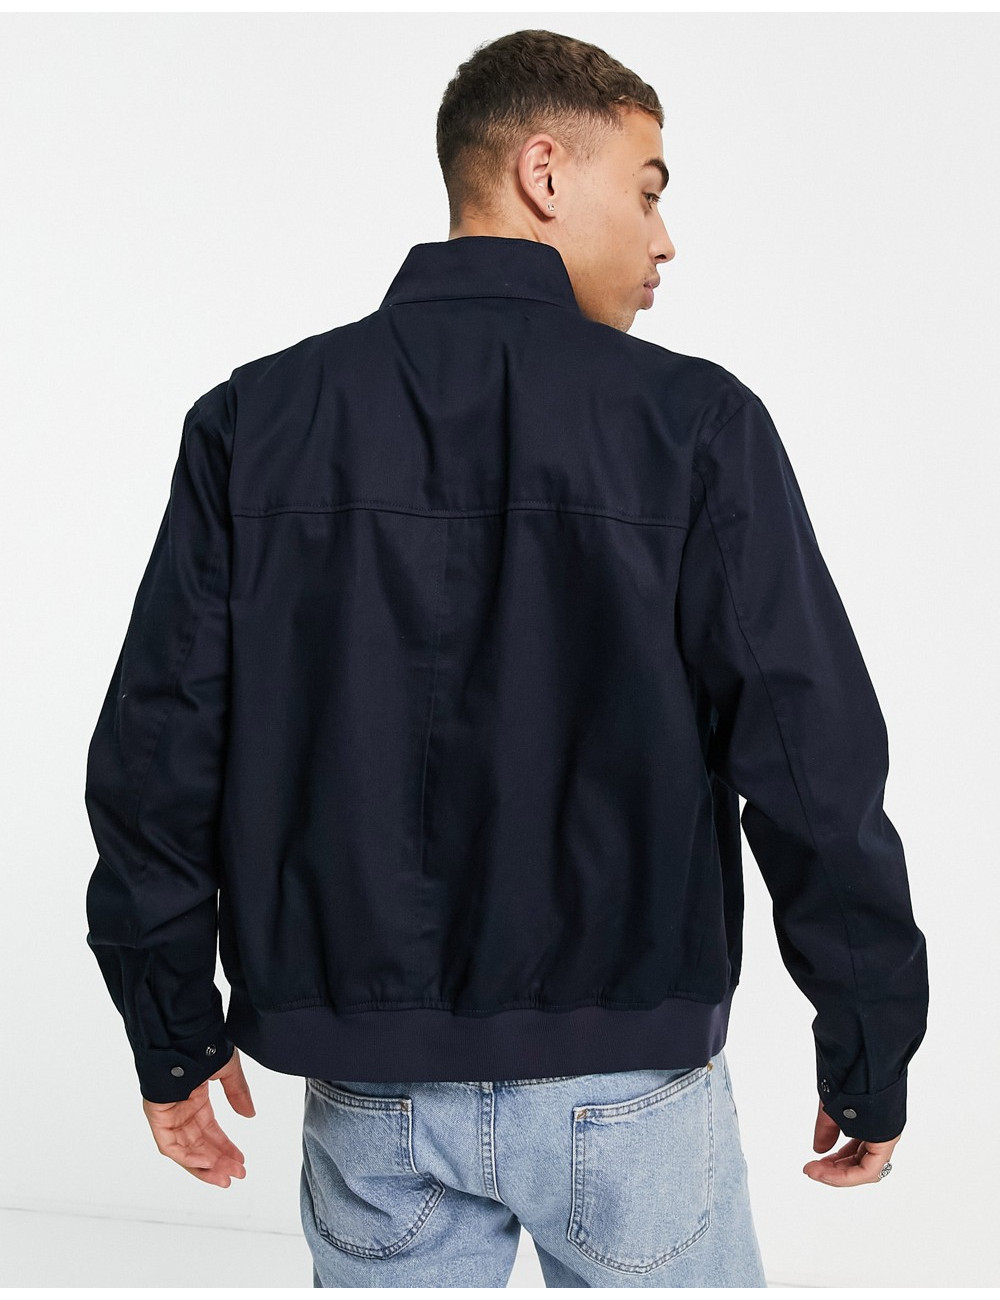 Lacoste lightweight jacket